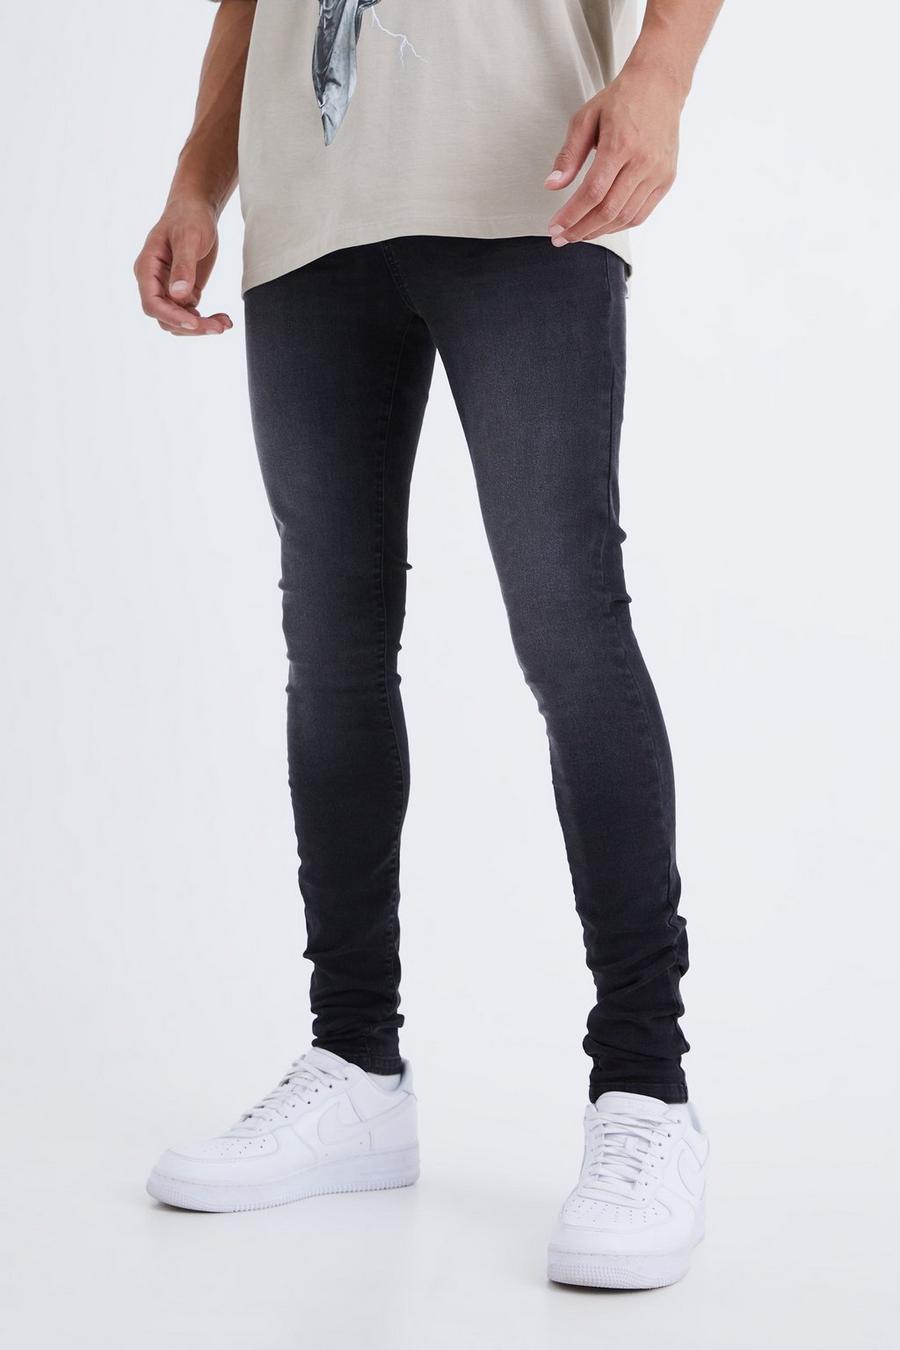 ASOS DESIGN Tall basic legging shorts in black